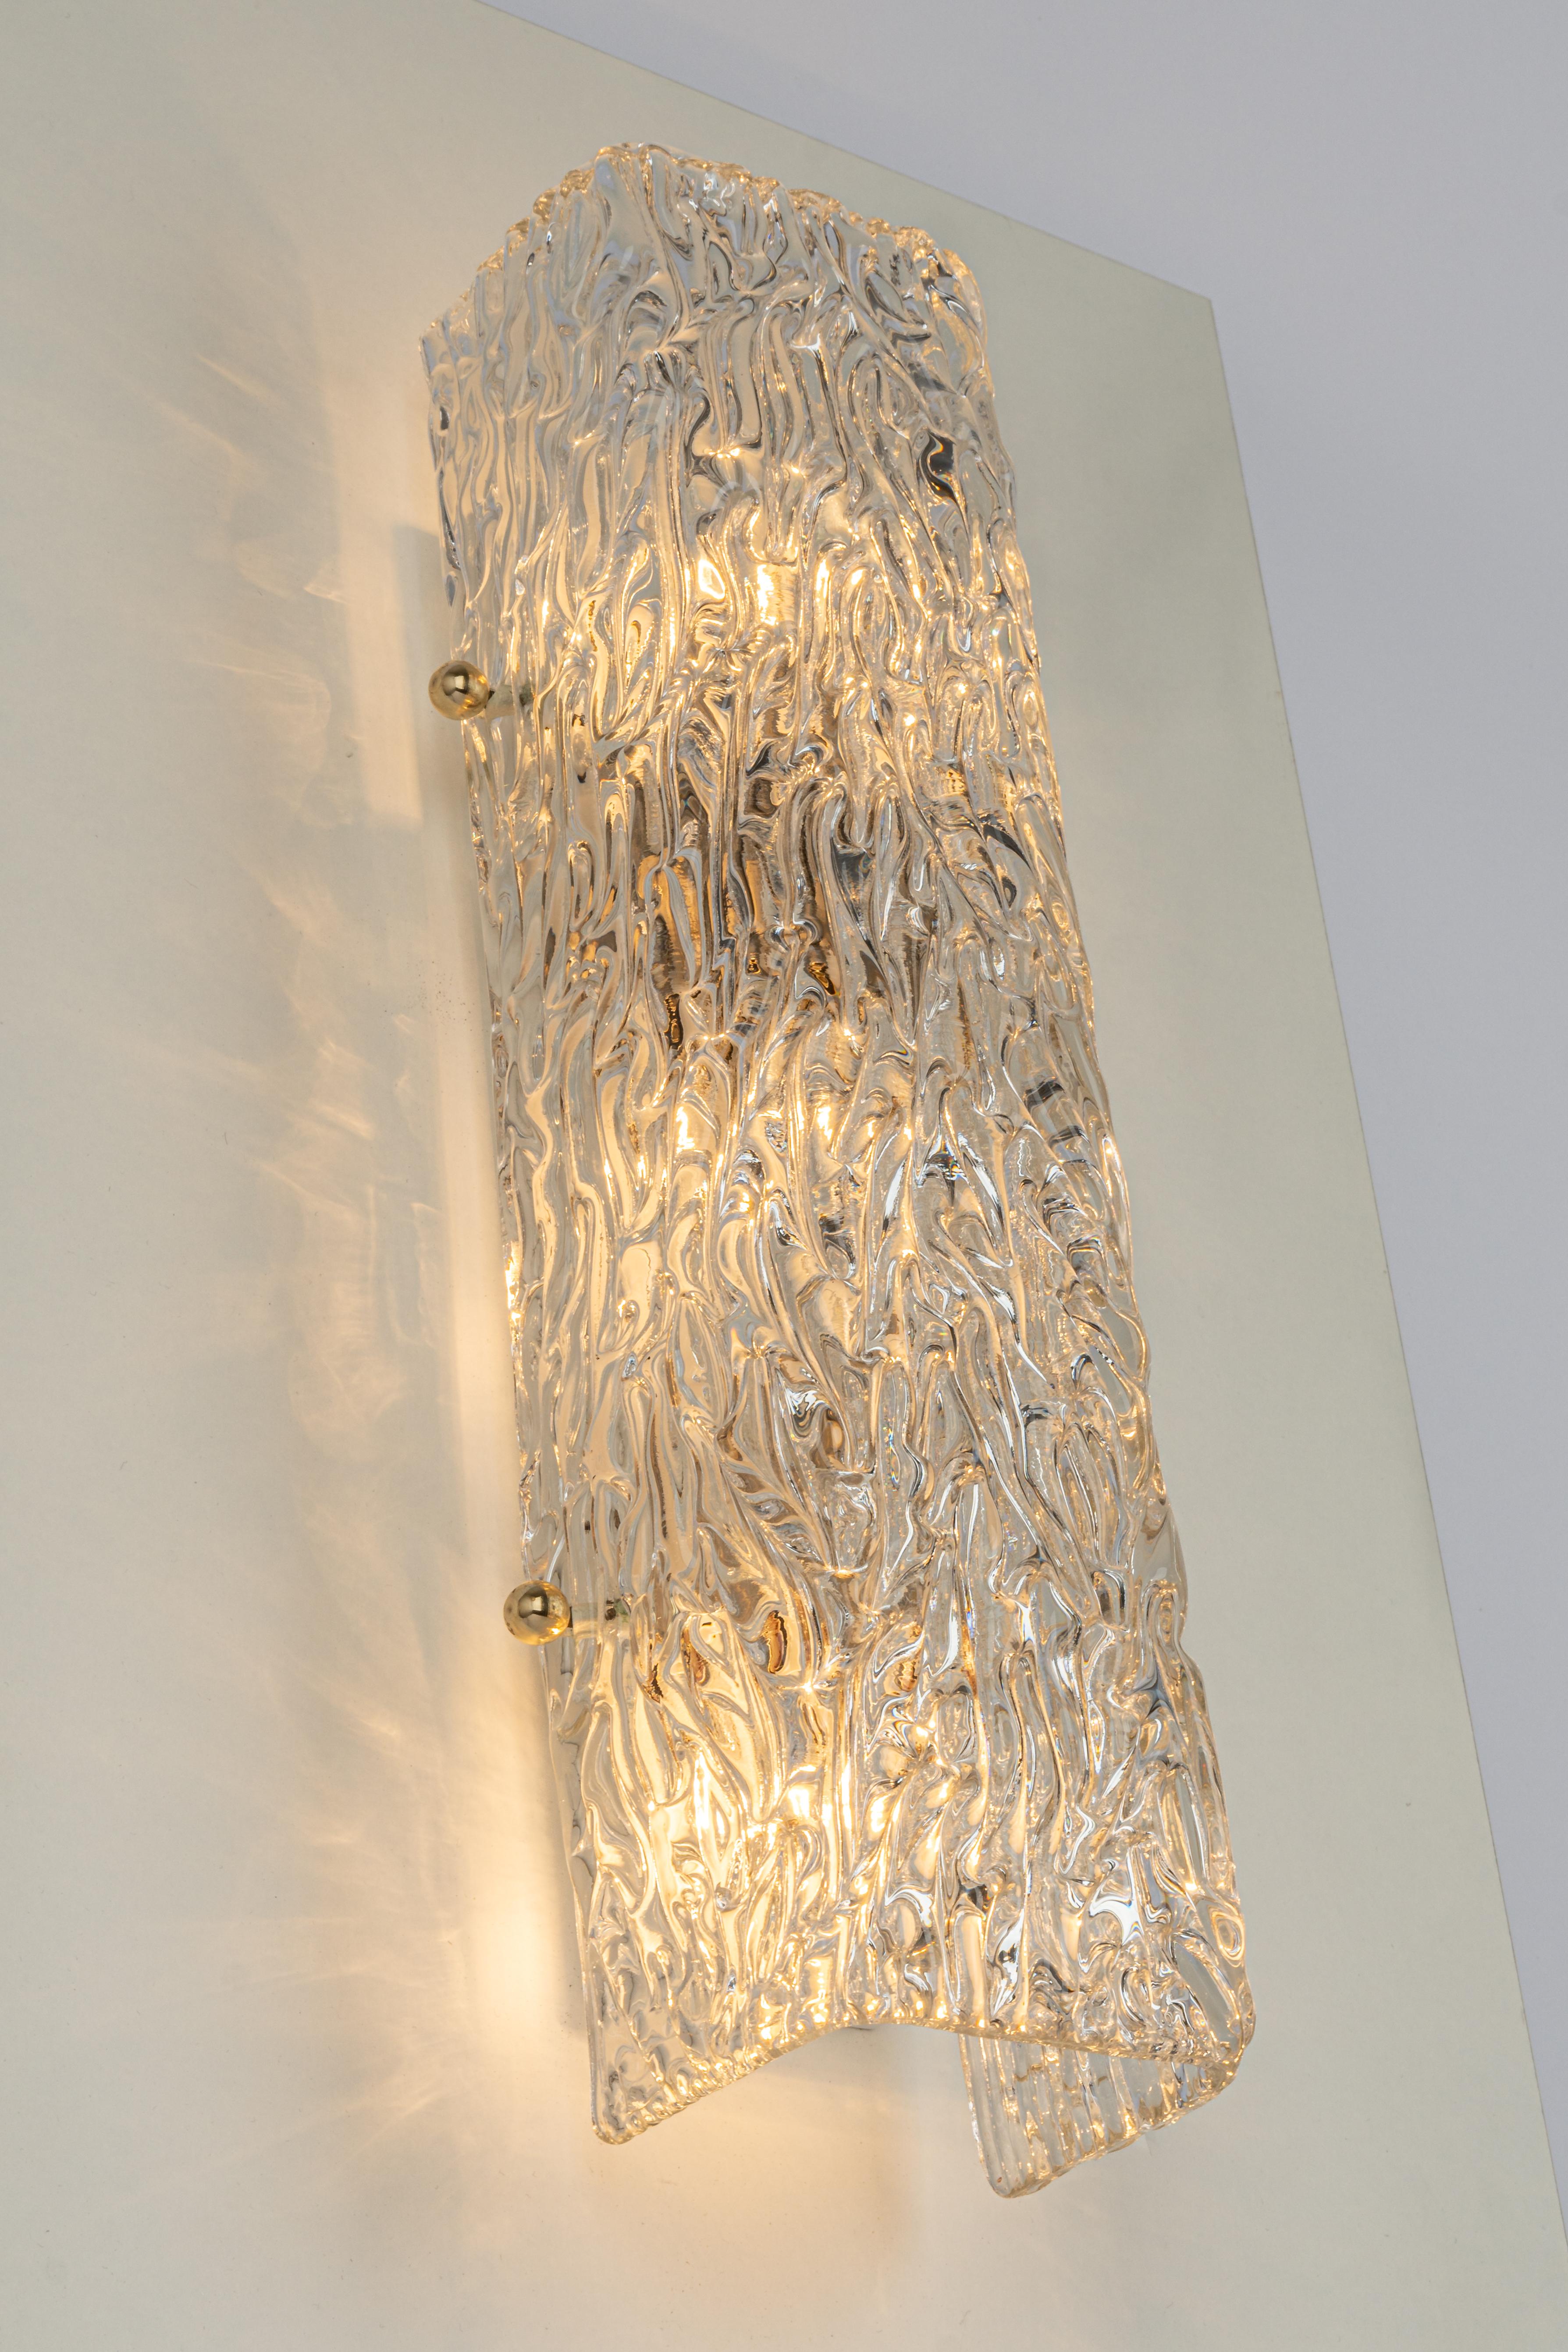 Large Single Kalmar Sconce Glass Wall Lights, Austria, 1960s For Sale 2